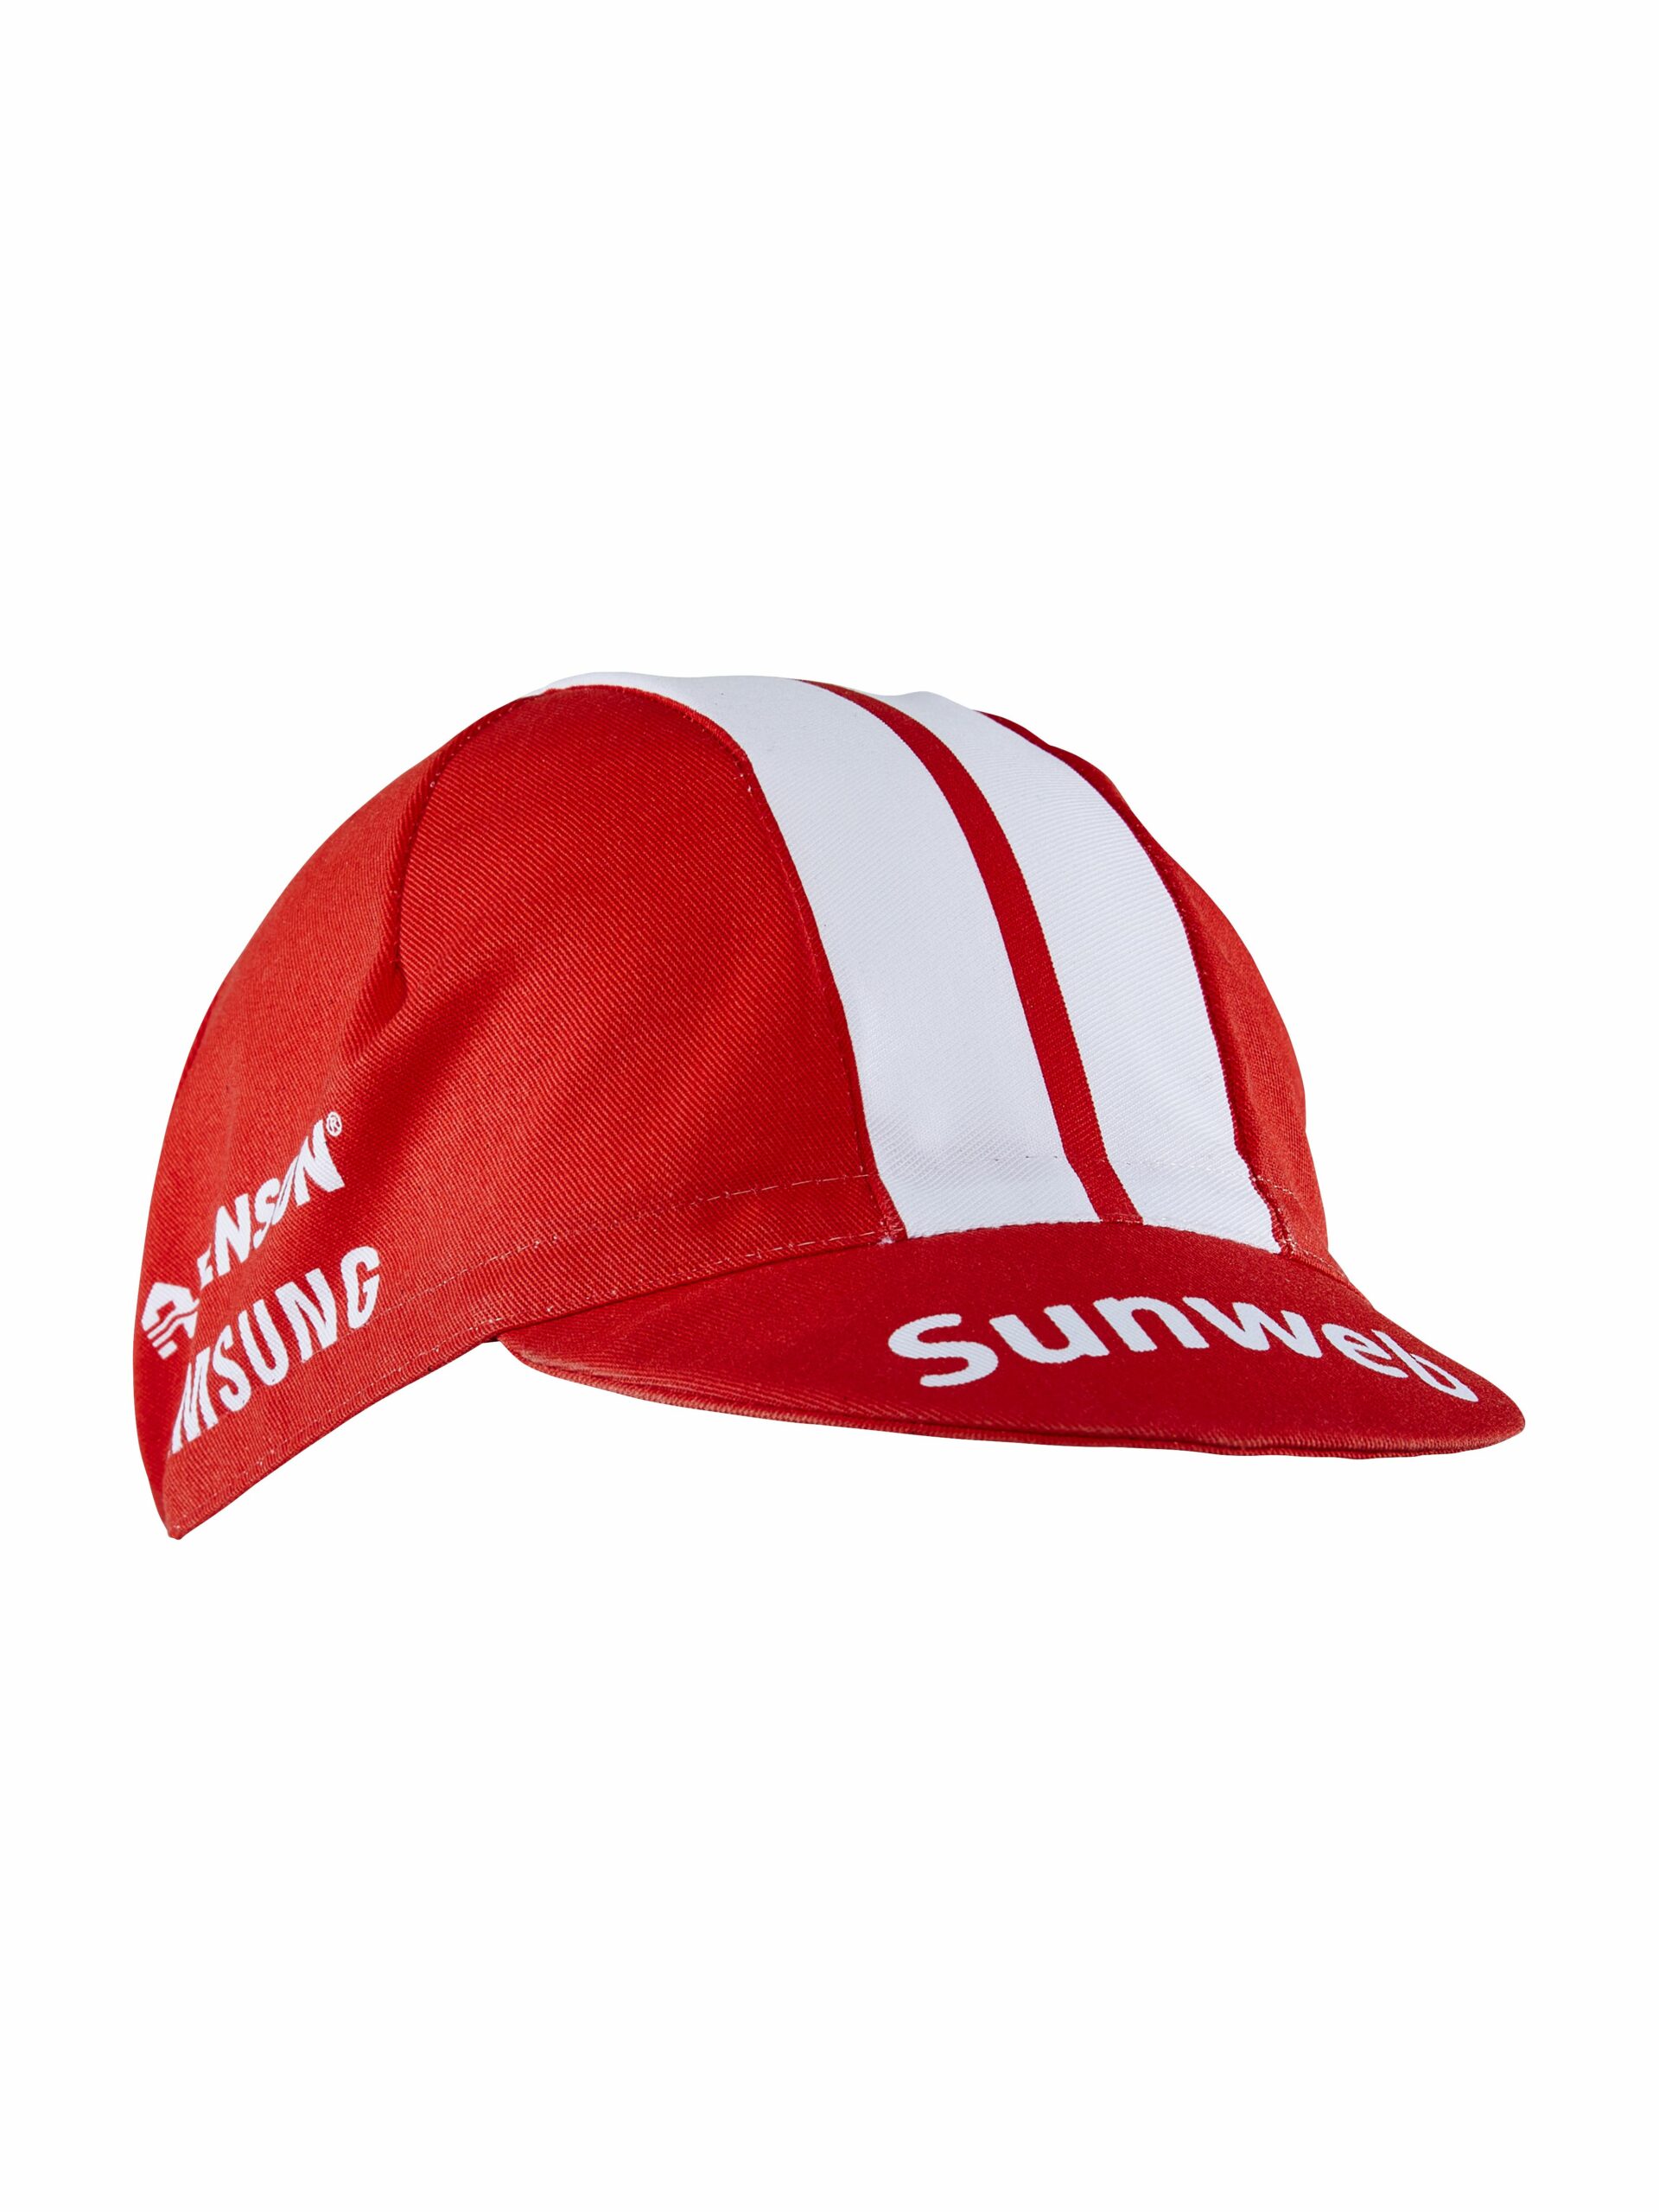 Craft - Team Sunweb Bike Cap - Sunweb Red Onesize